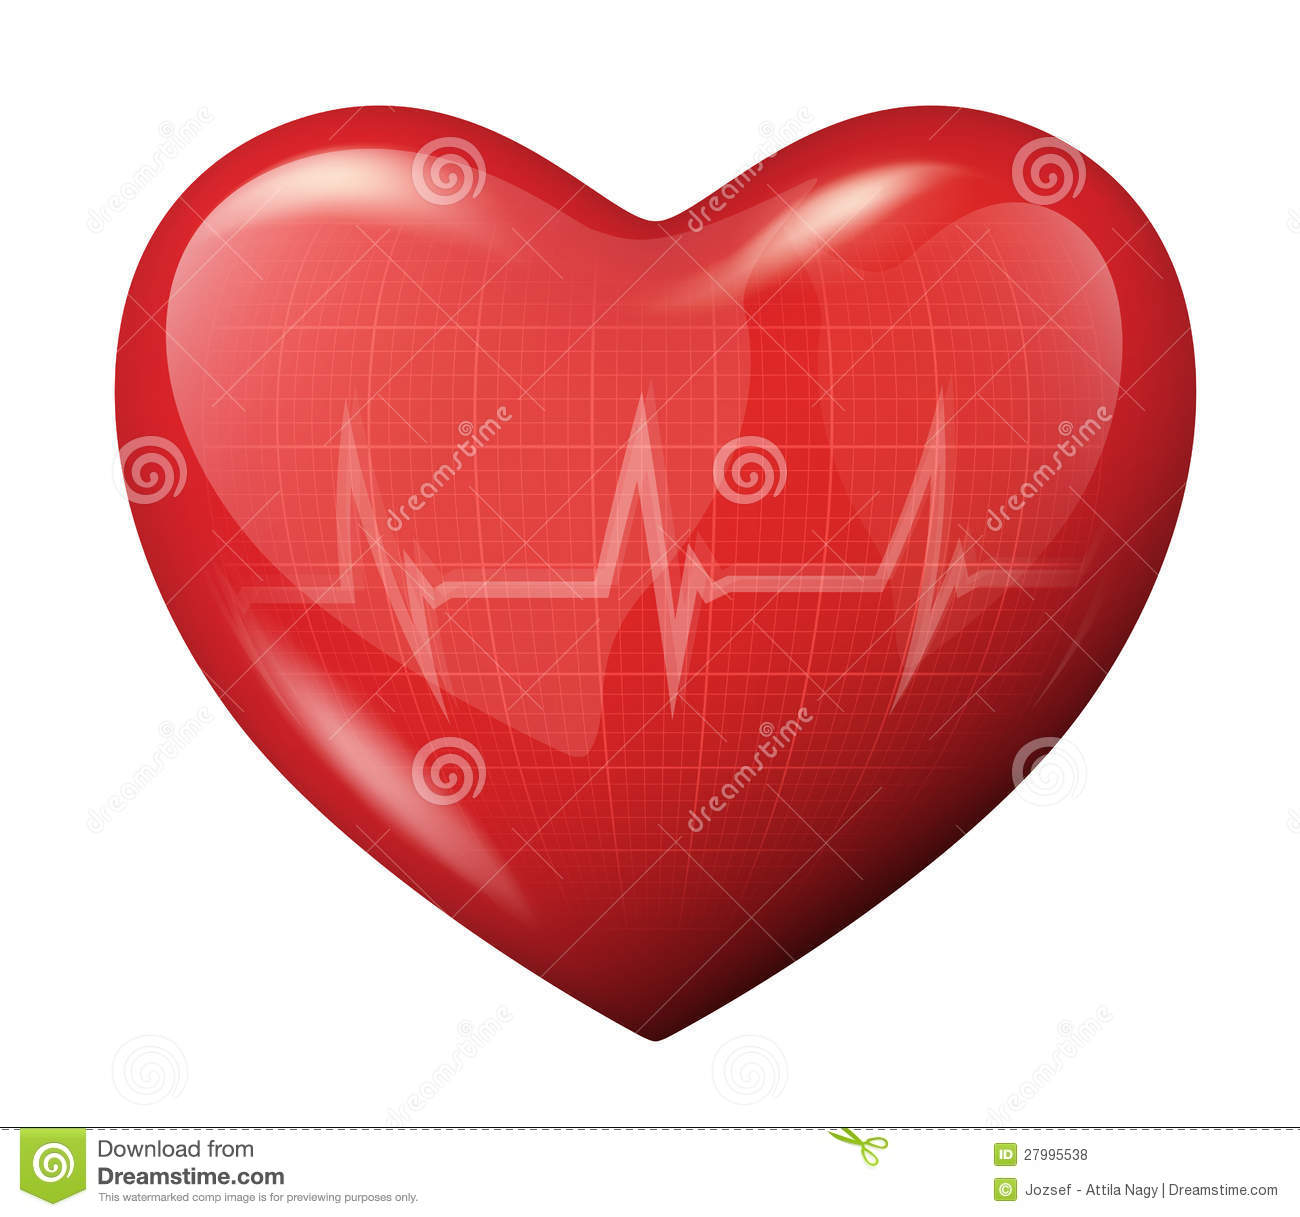 8 3D Heart Vector Images